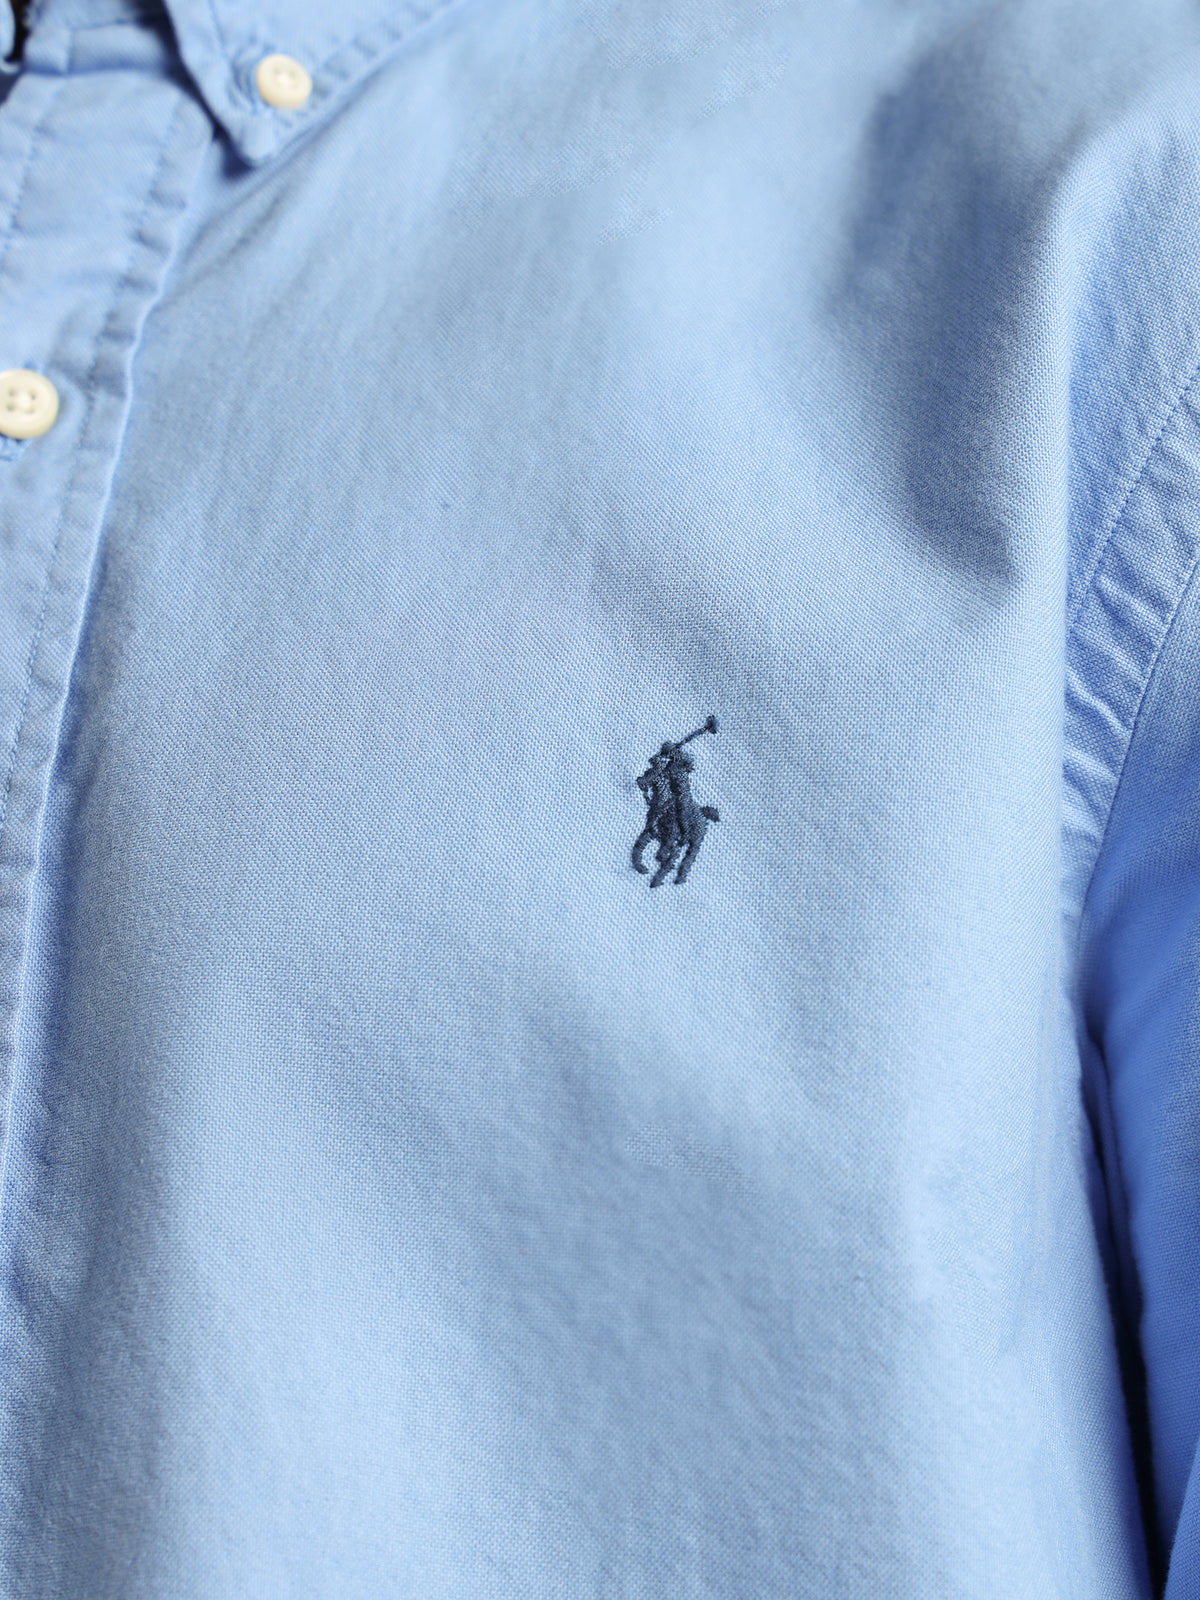 Oxford Long Sleeve Sport Shirt in Light Blue